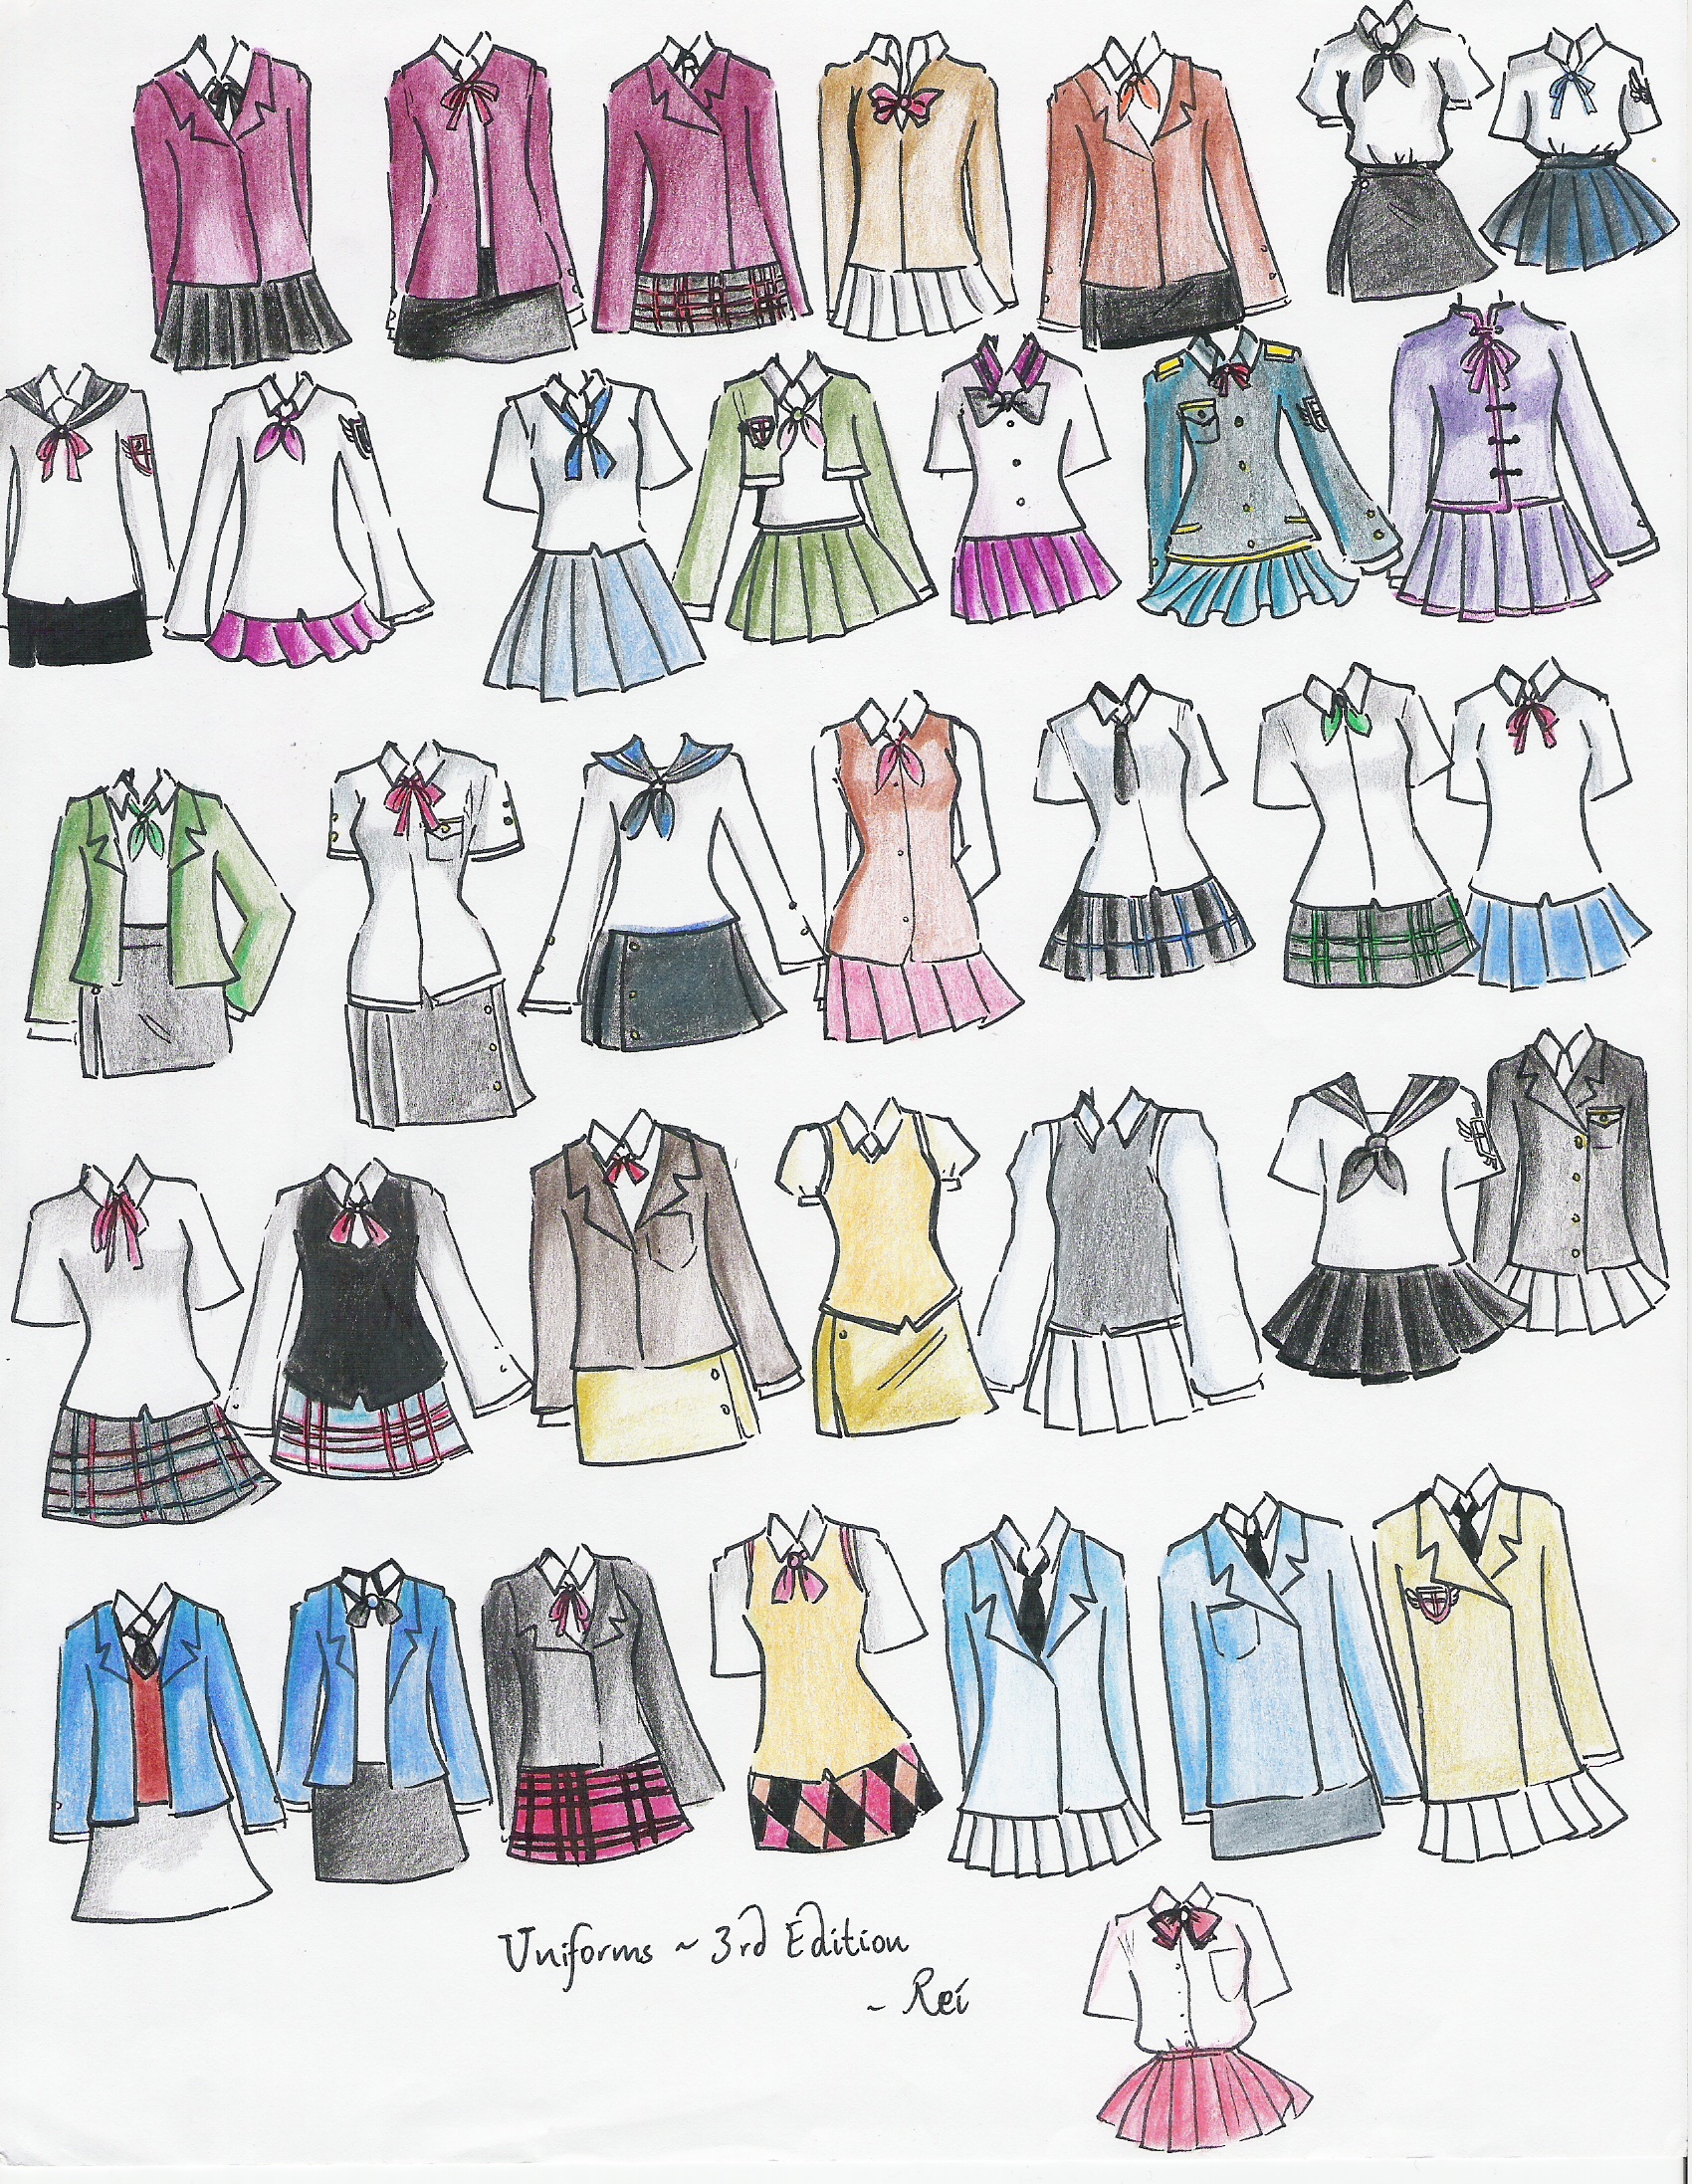 Anime school girl uniforms by SarcasticLittleDevil on DeviantArt